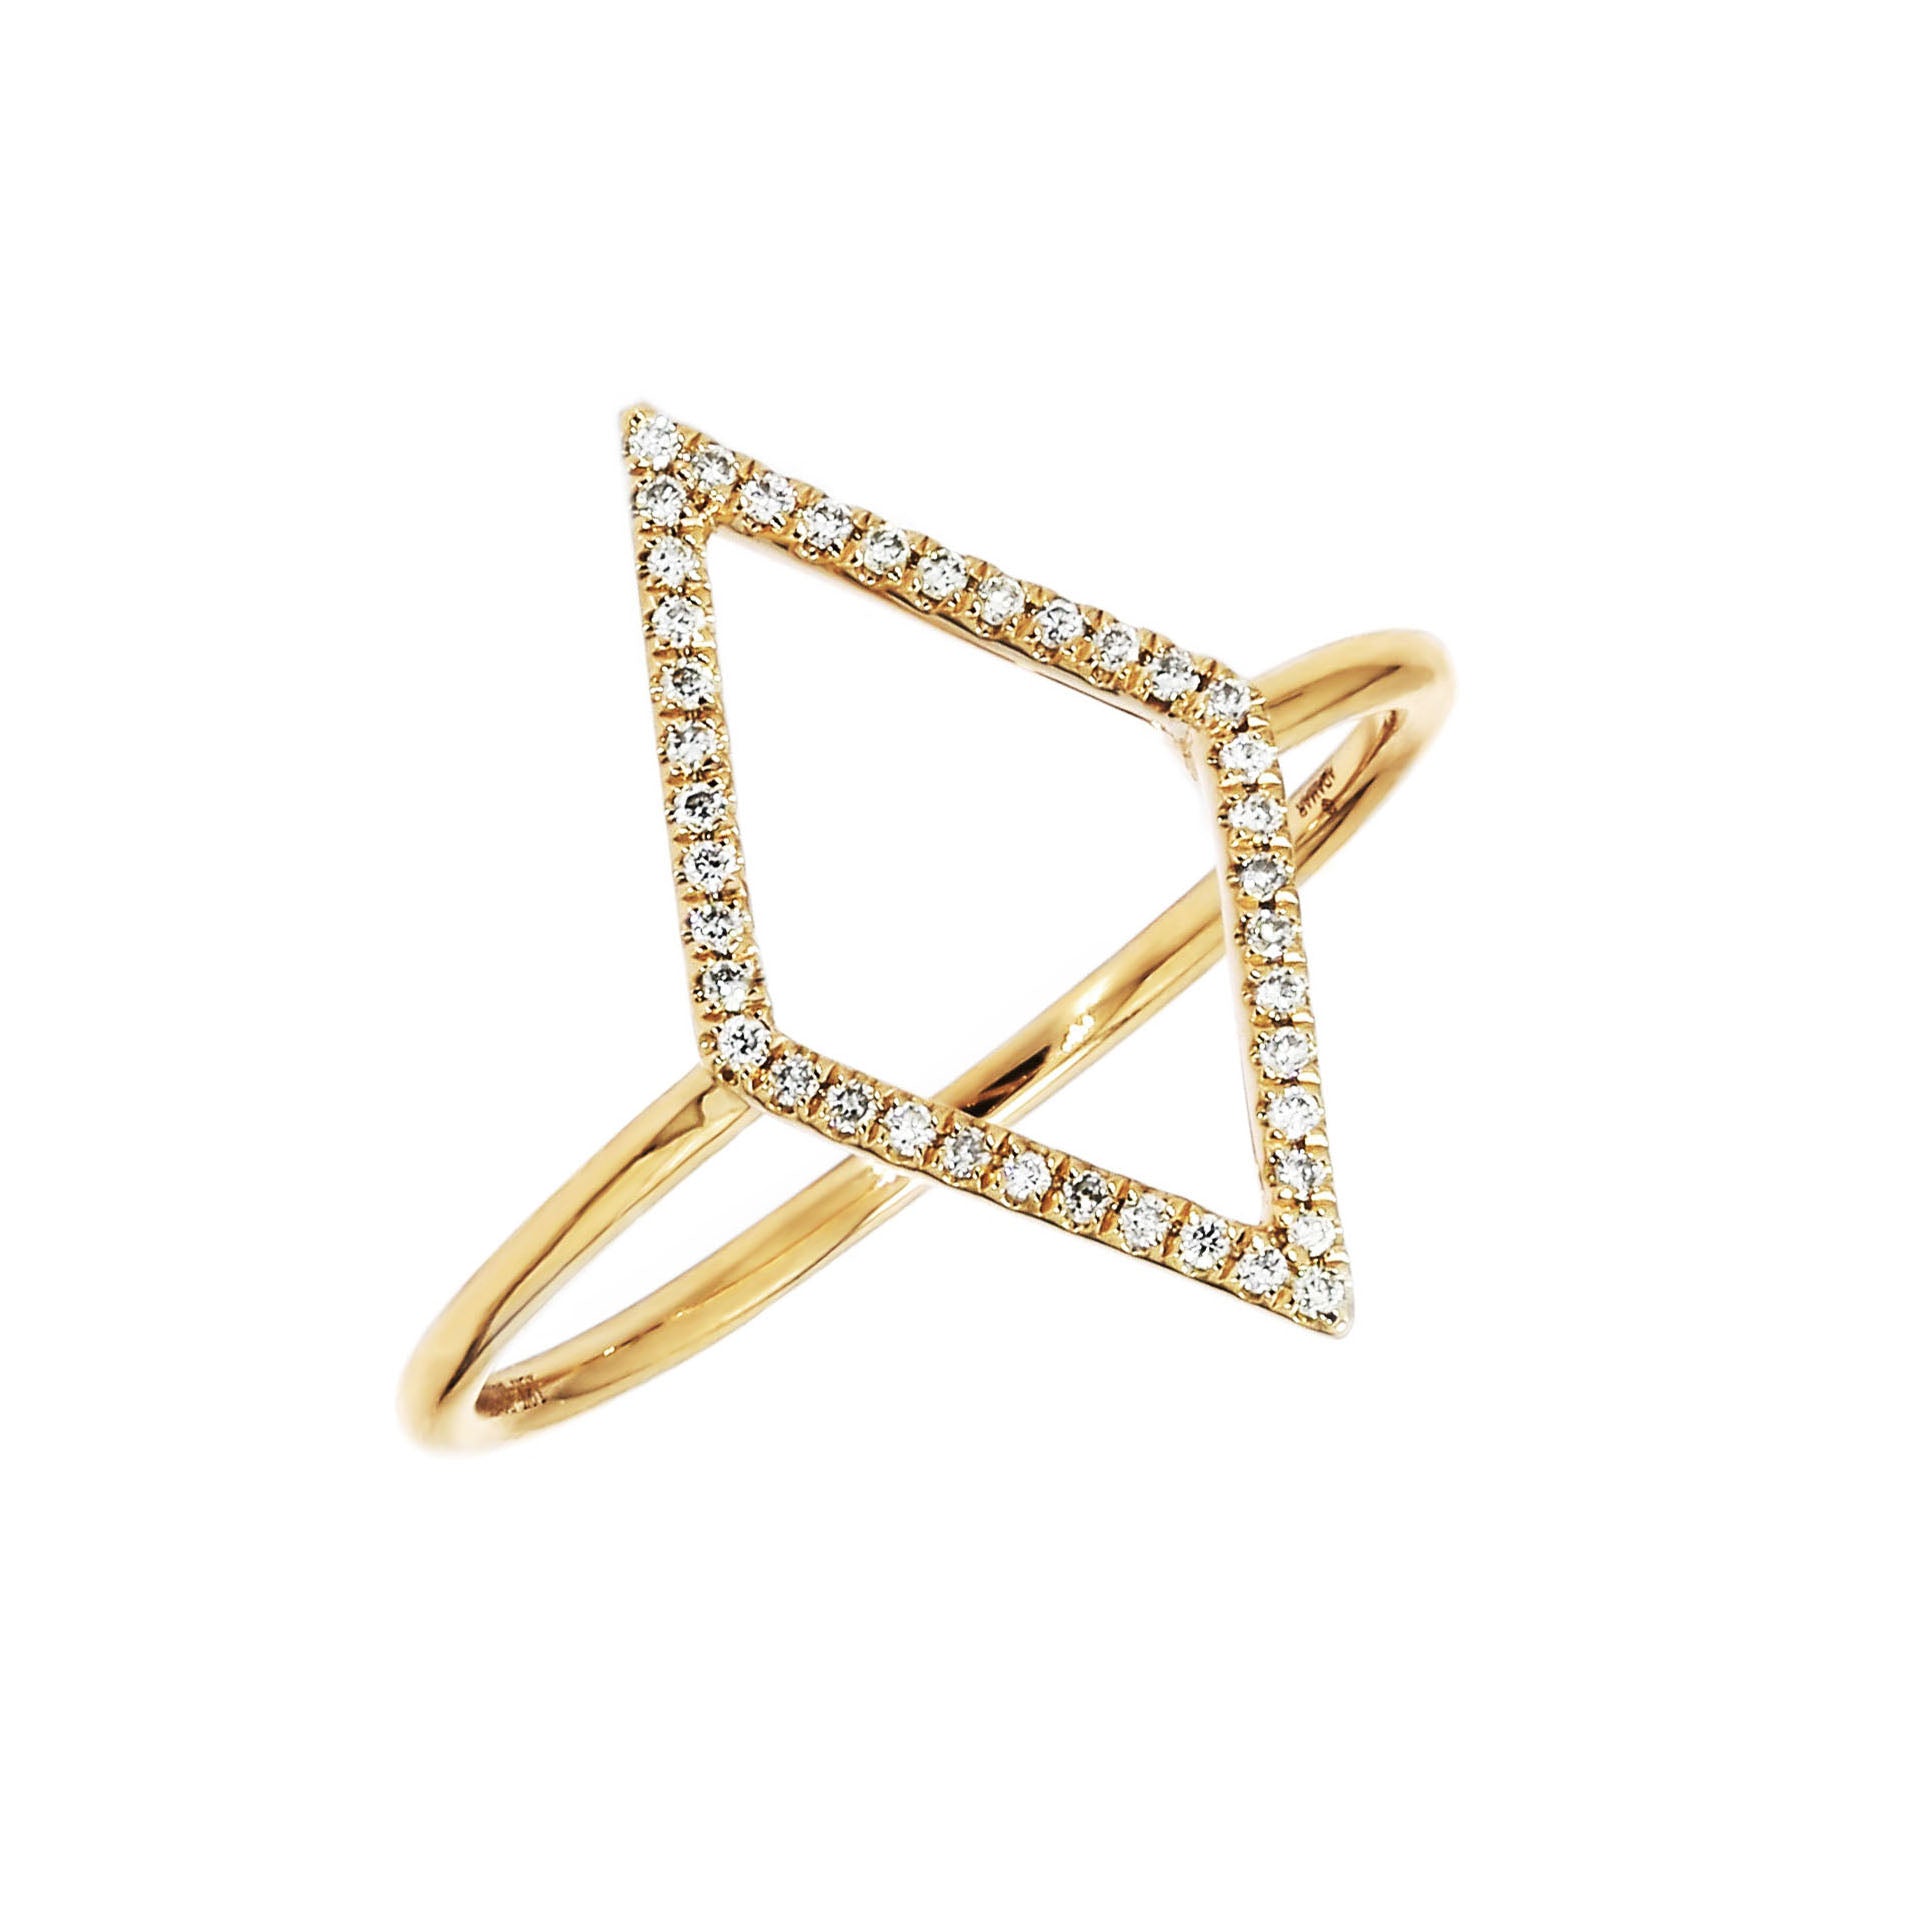 Adamar Jewels LUZ Cometa Ring in 18K yellow gold set with diamonds